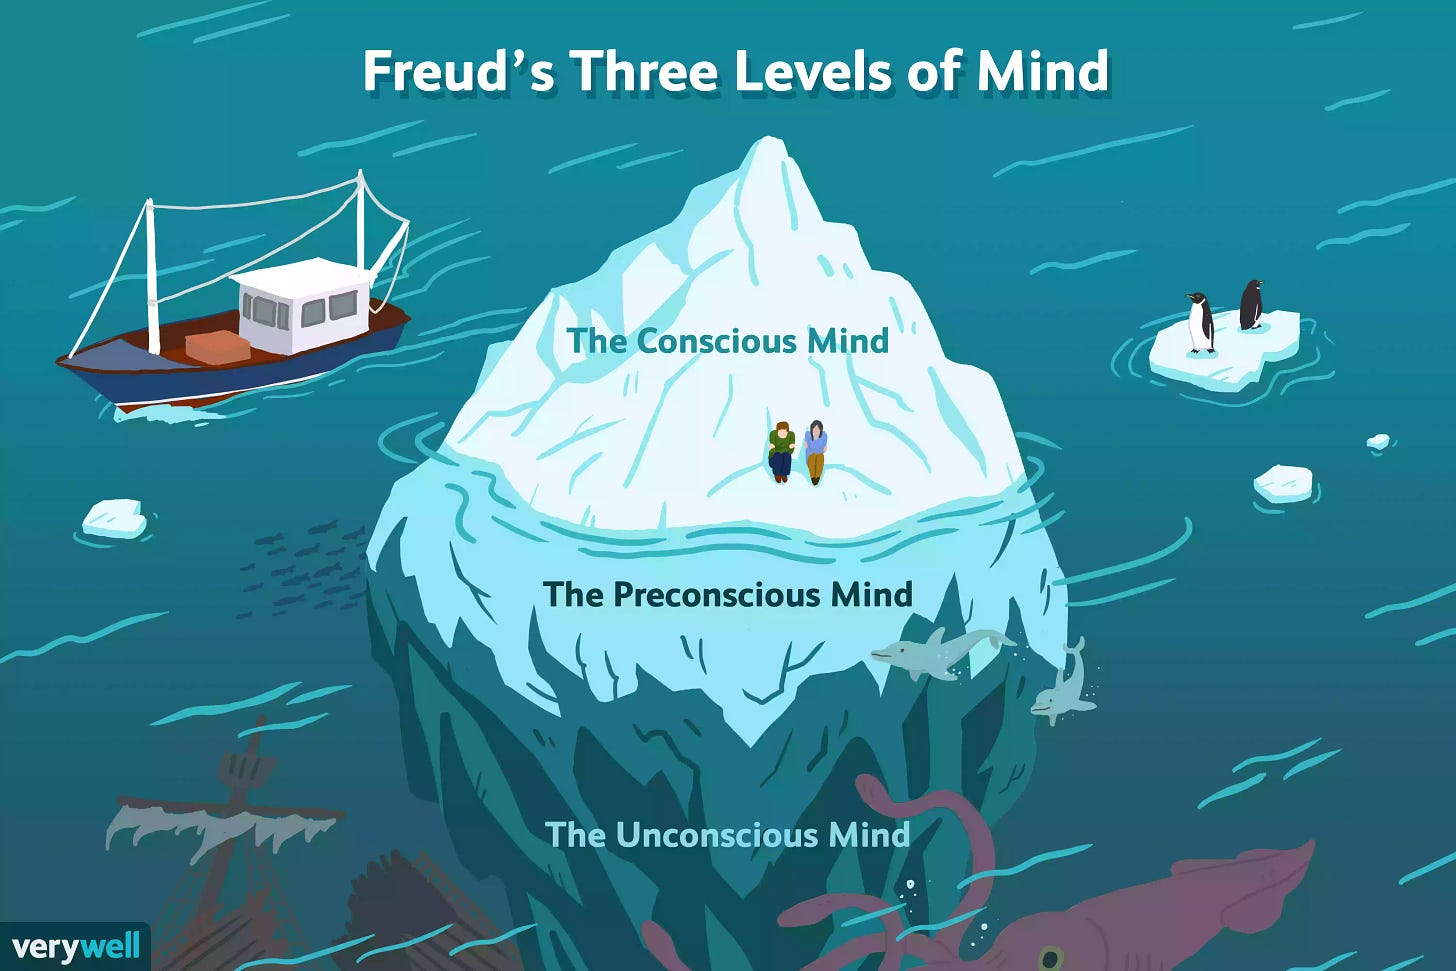 Freud's Three Levels of Mind